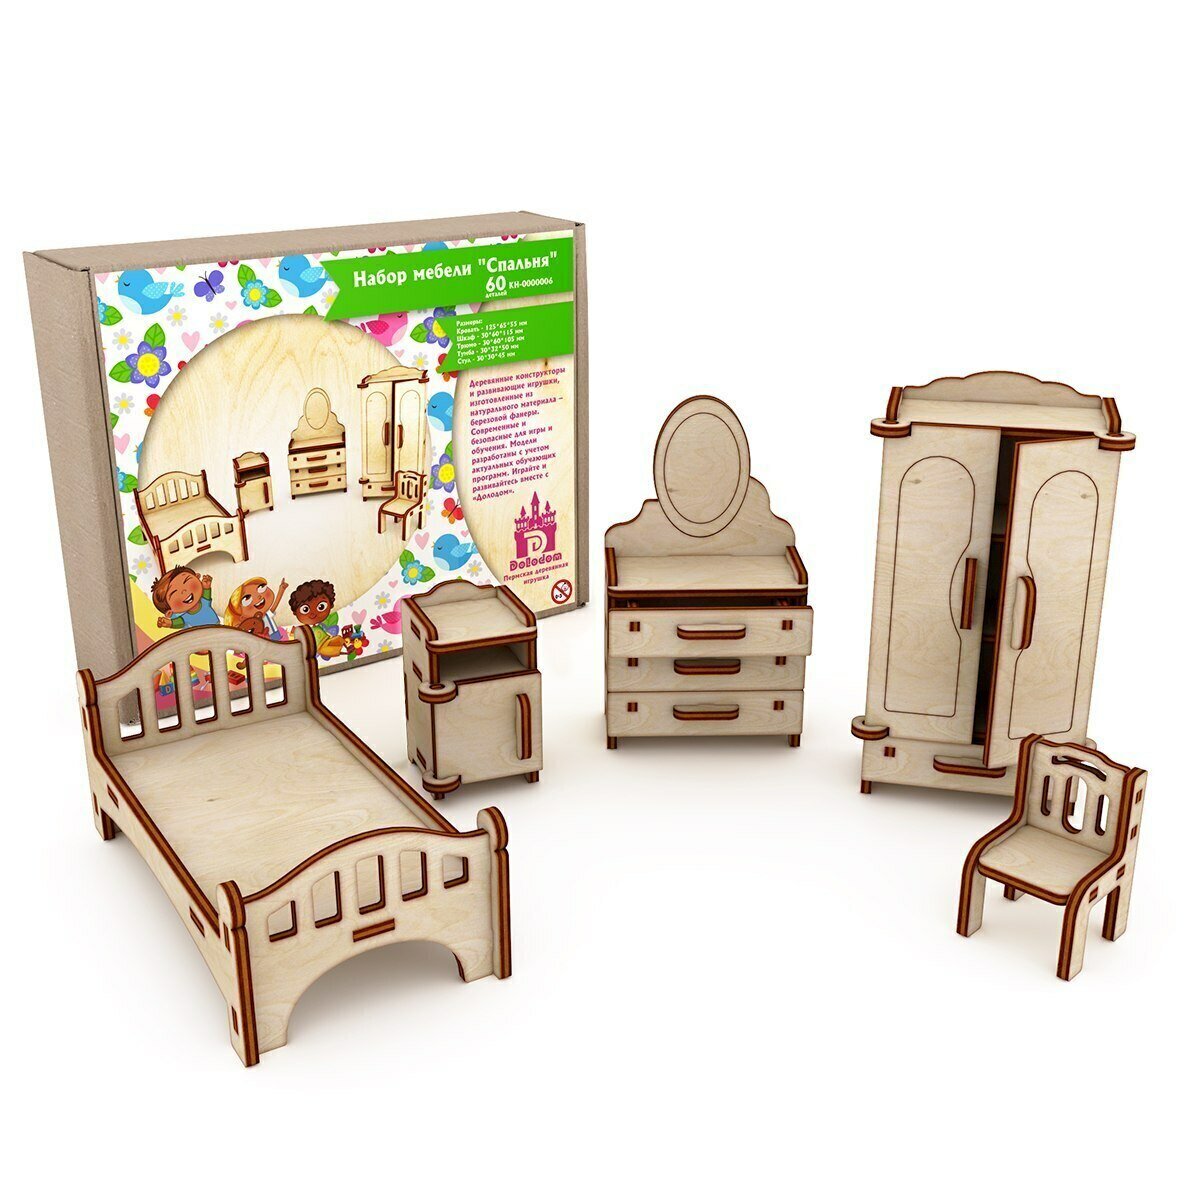 Набор мебели Dolodom "Спальня"60 деталей (Коробка упаковка)